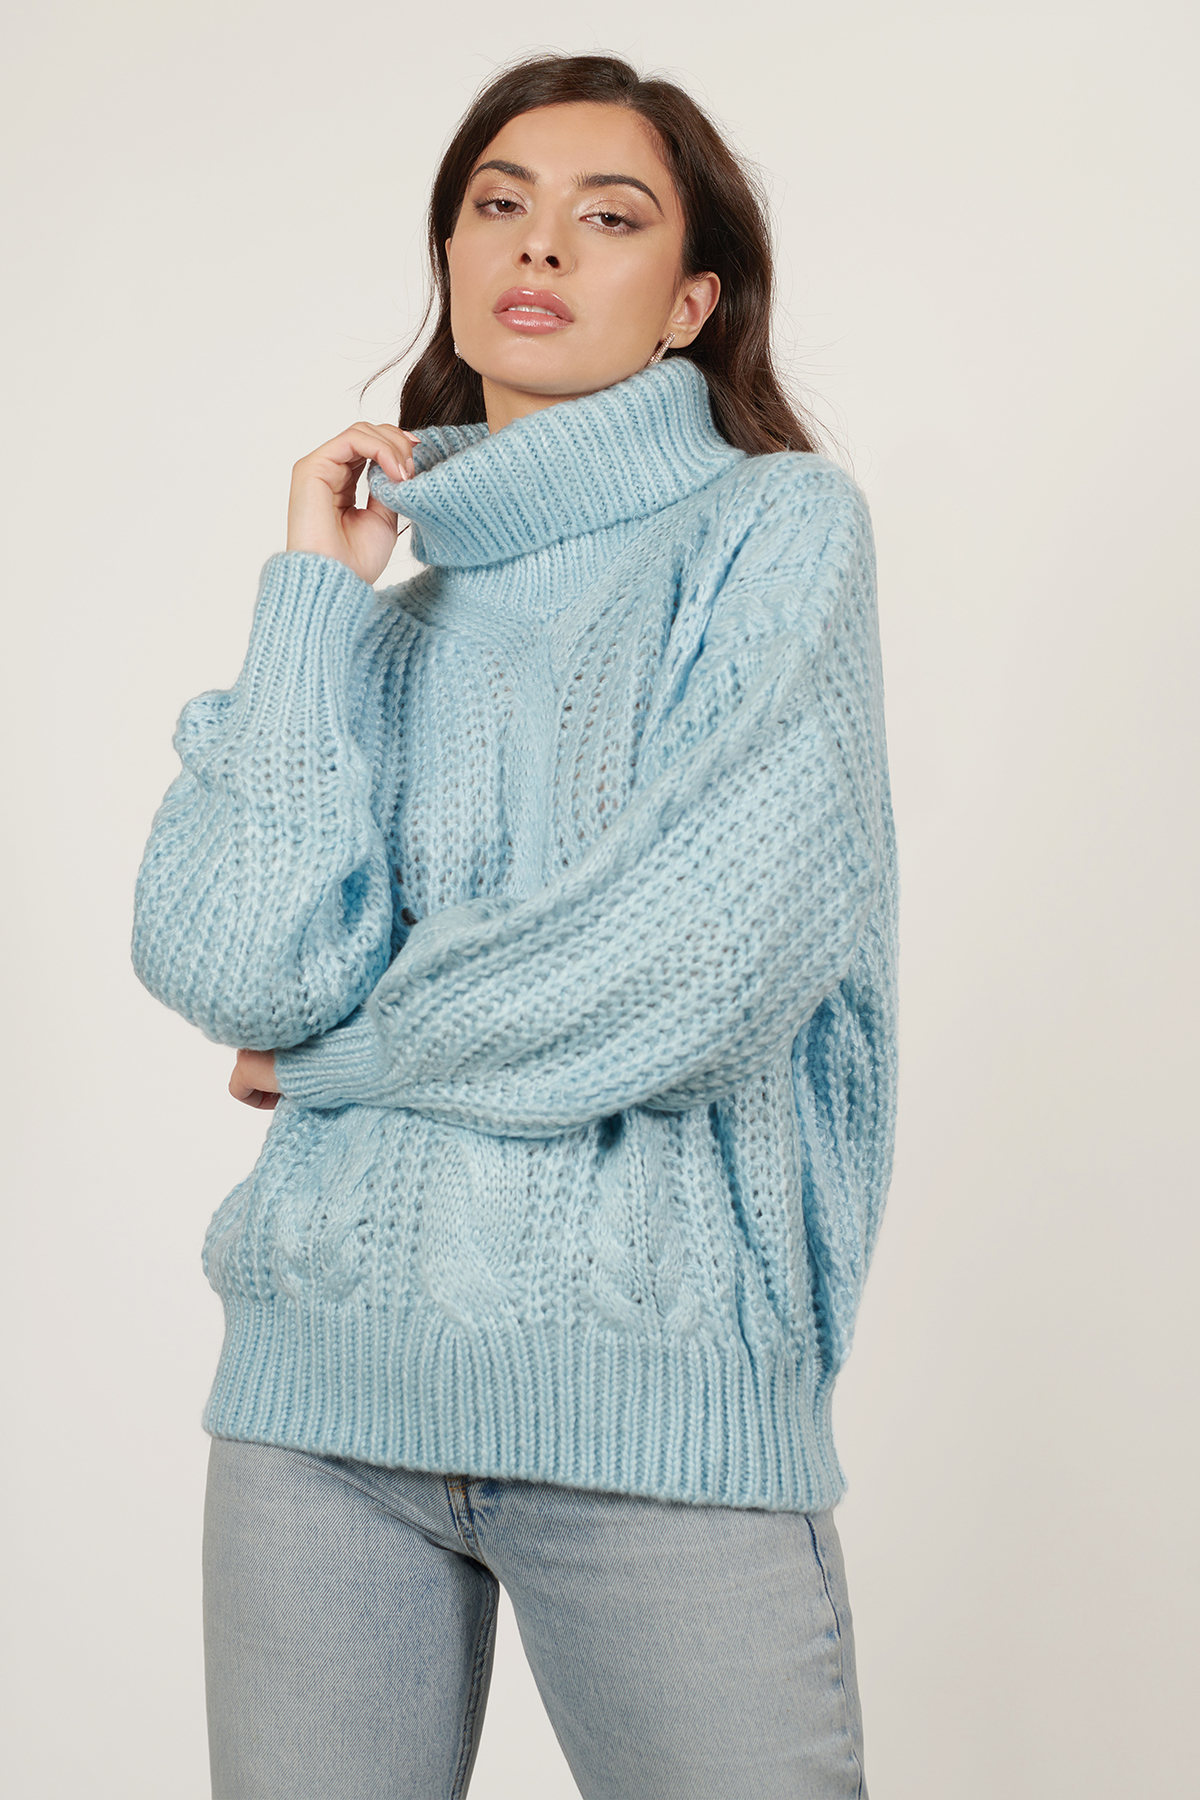 Blue Sweater - Turtle Neck Sweater - Light Blue Oversized Sweater